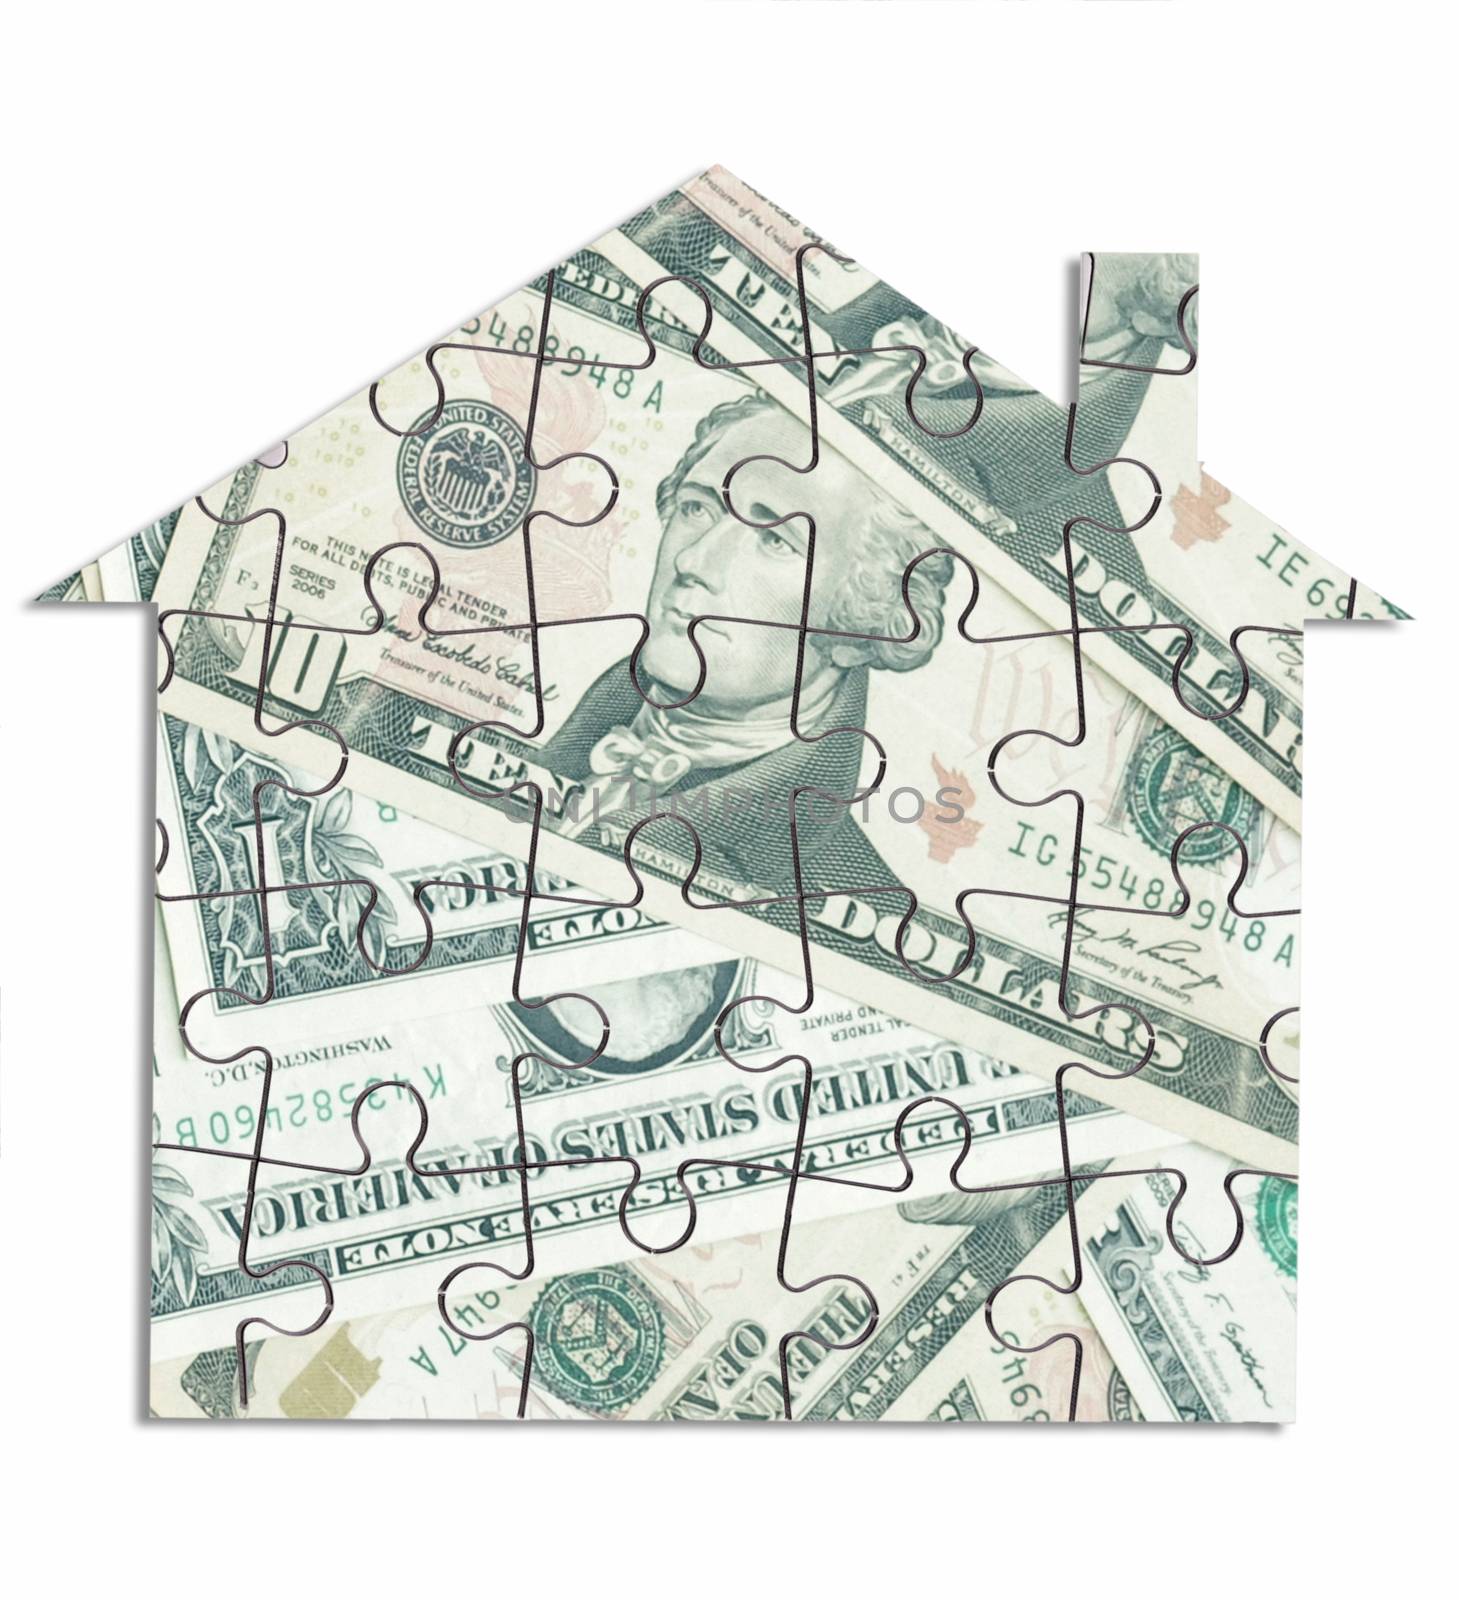 Money house jigsaw by unikpix